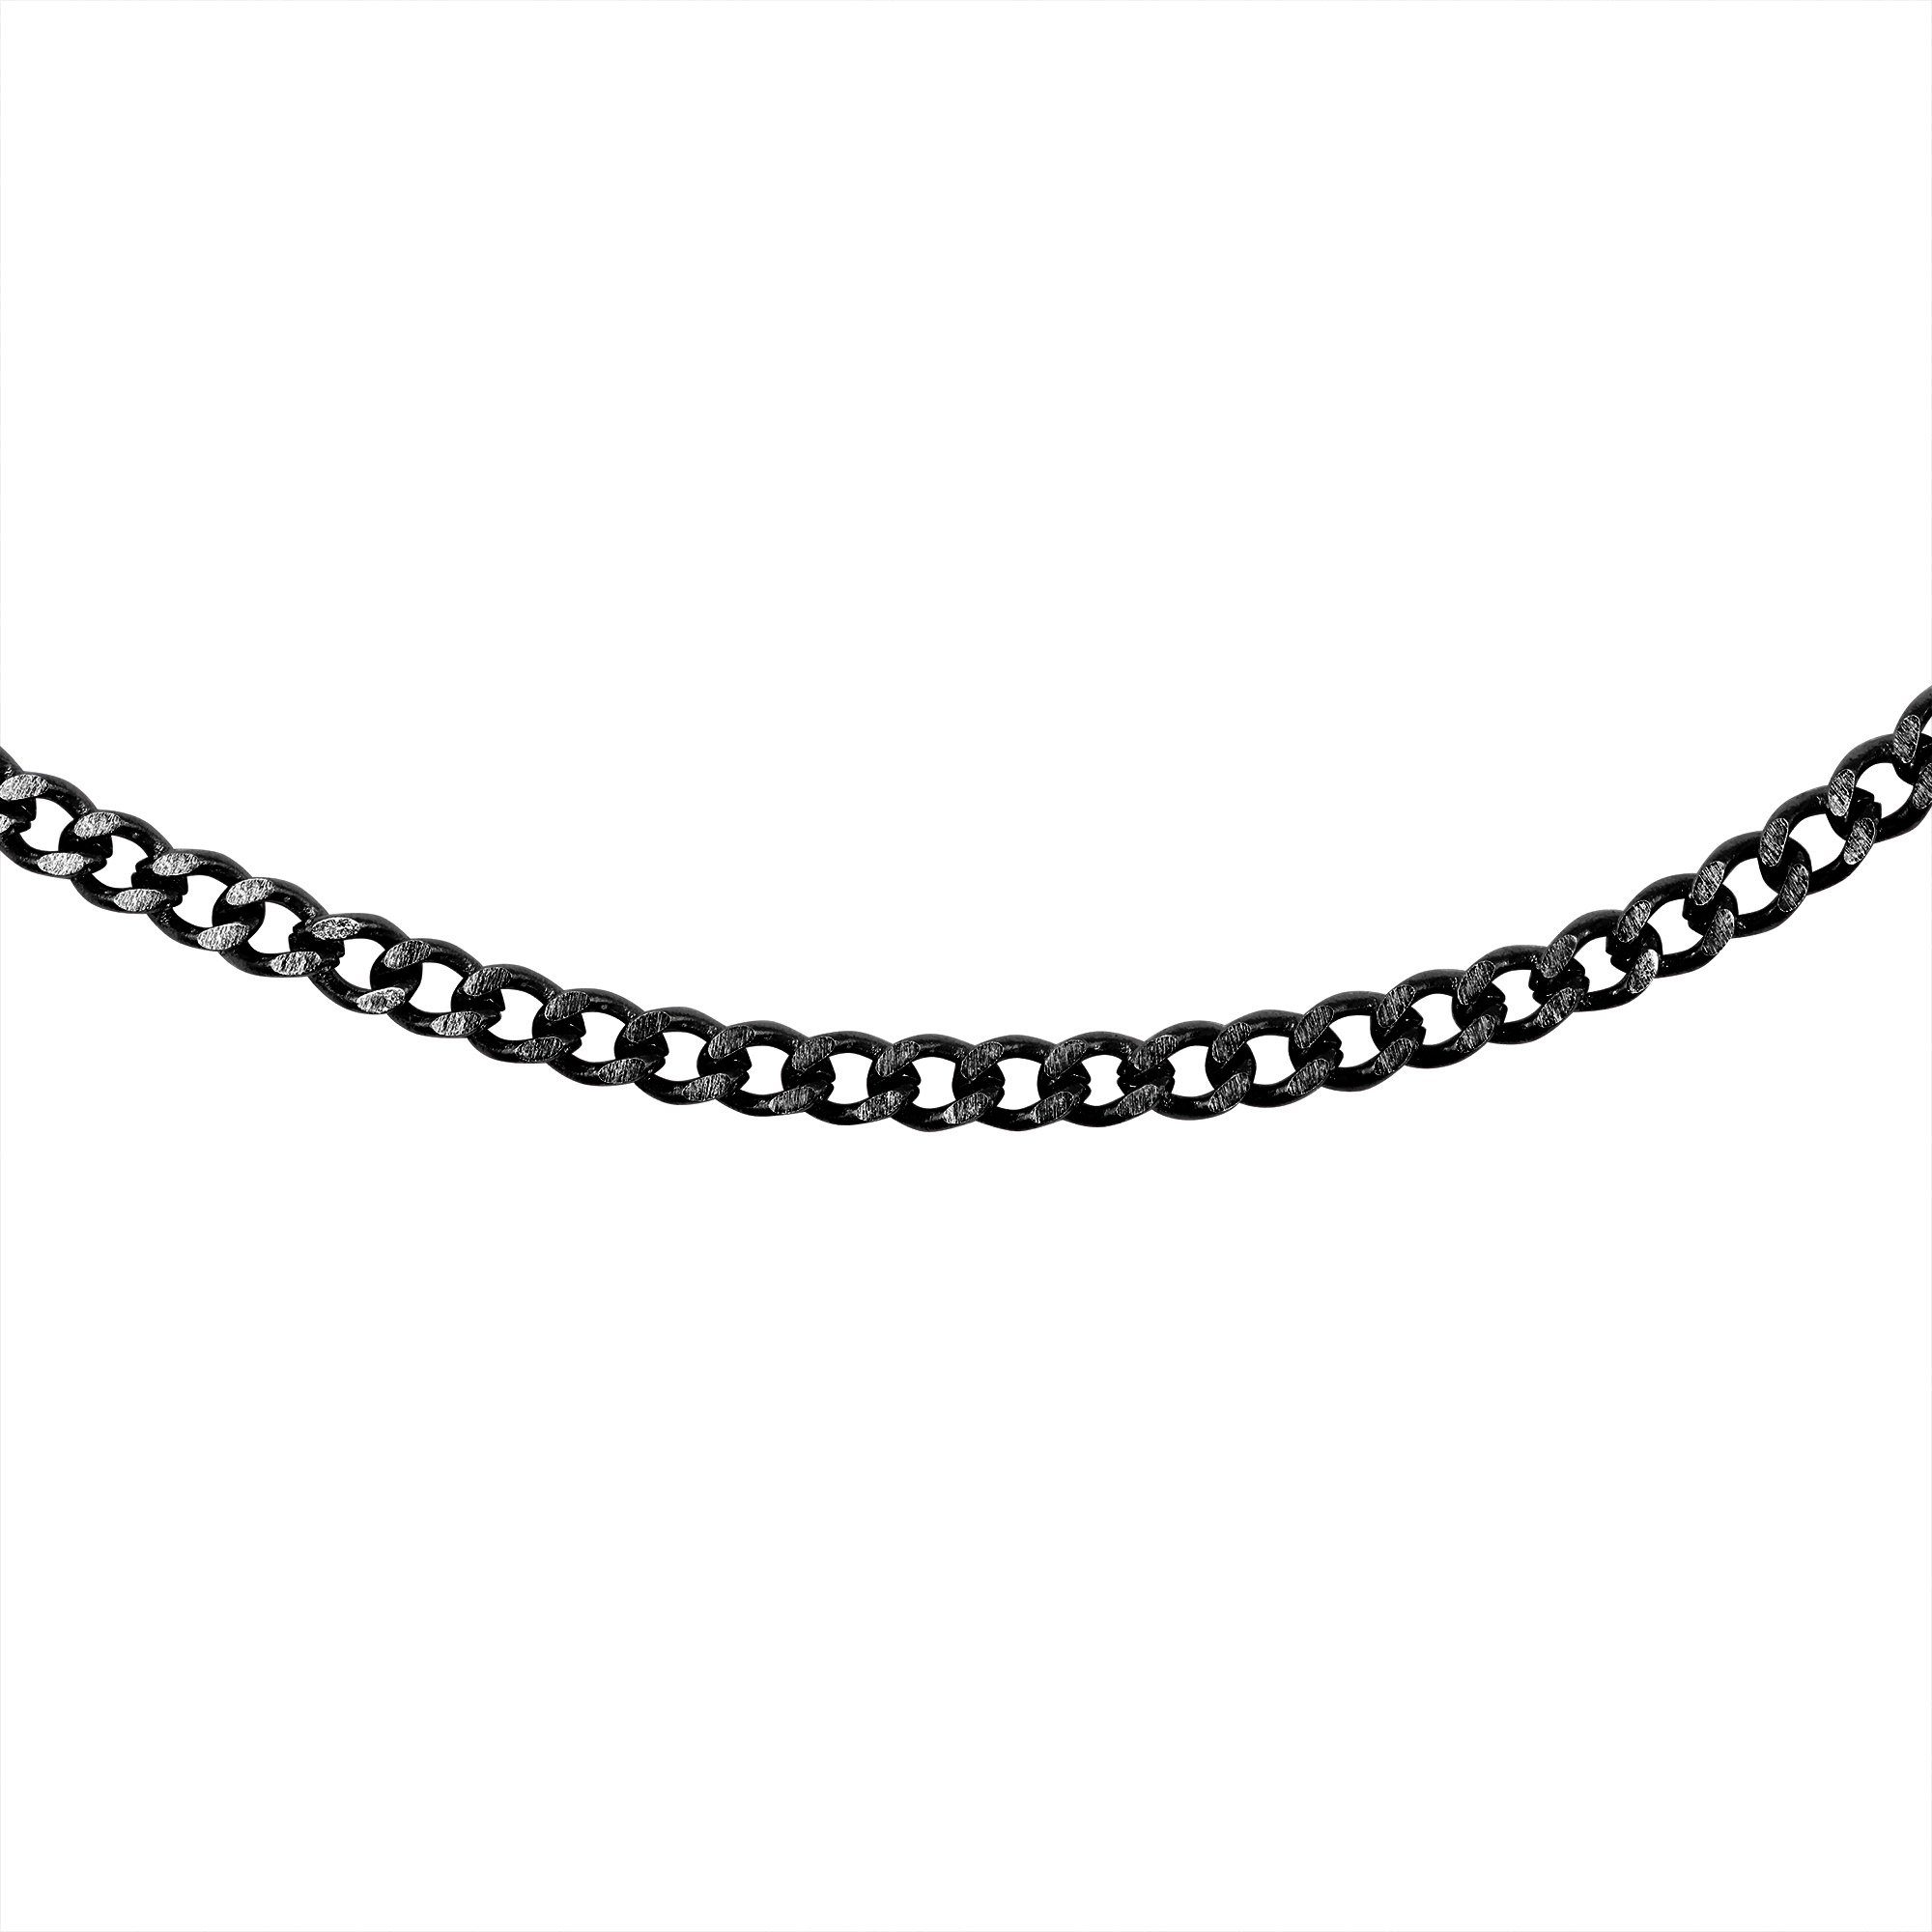 Heideman Männer schwarz farben inkl. Geschenkverpackung), Theo (Armband, Armband Armkette